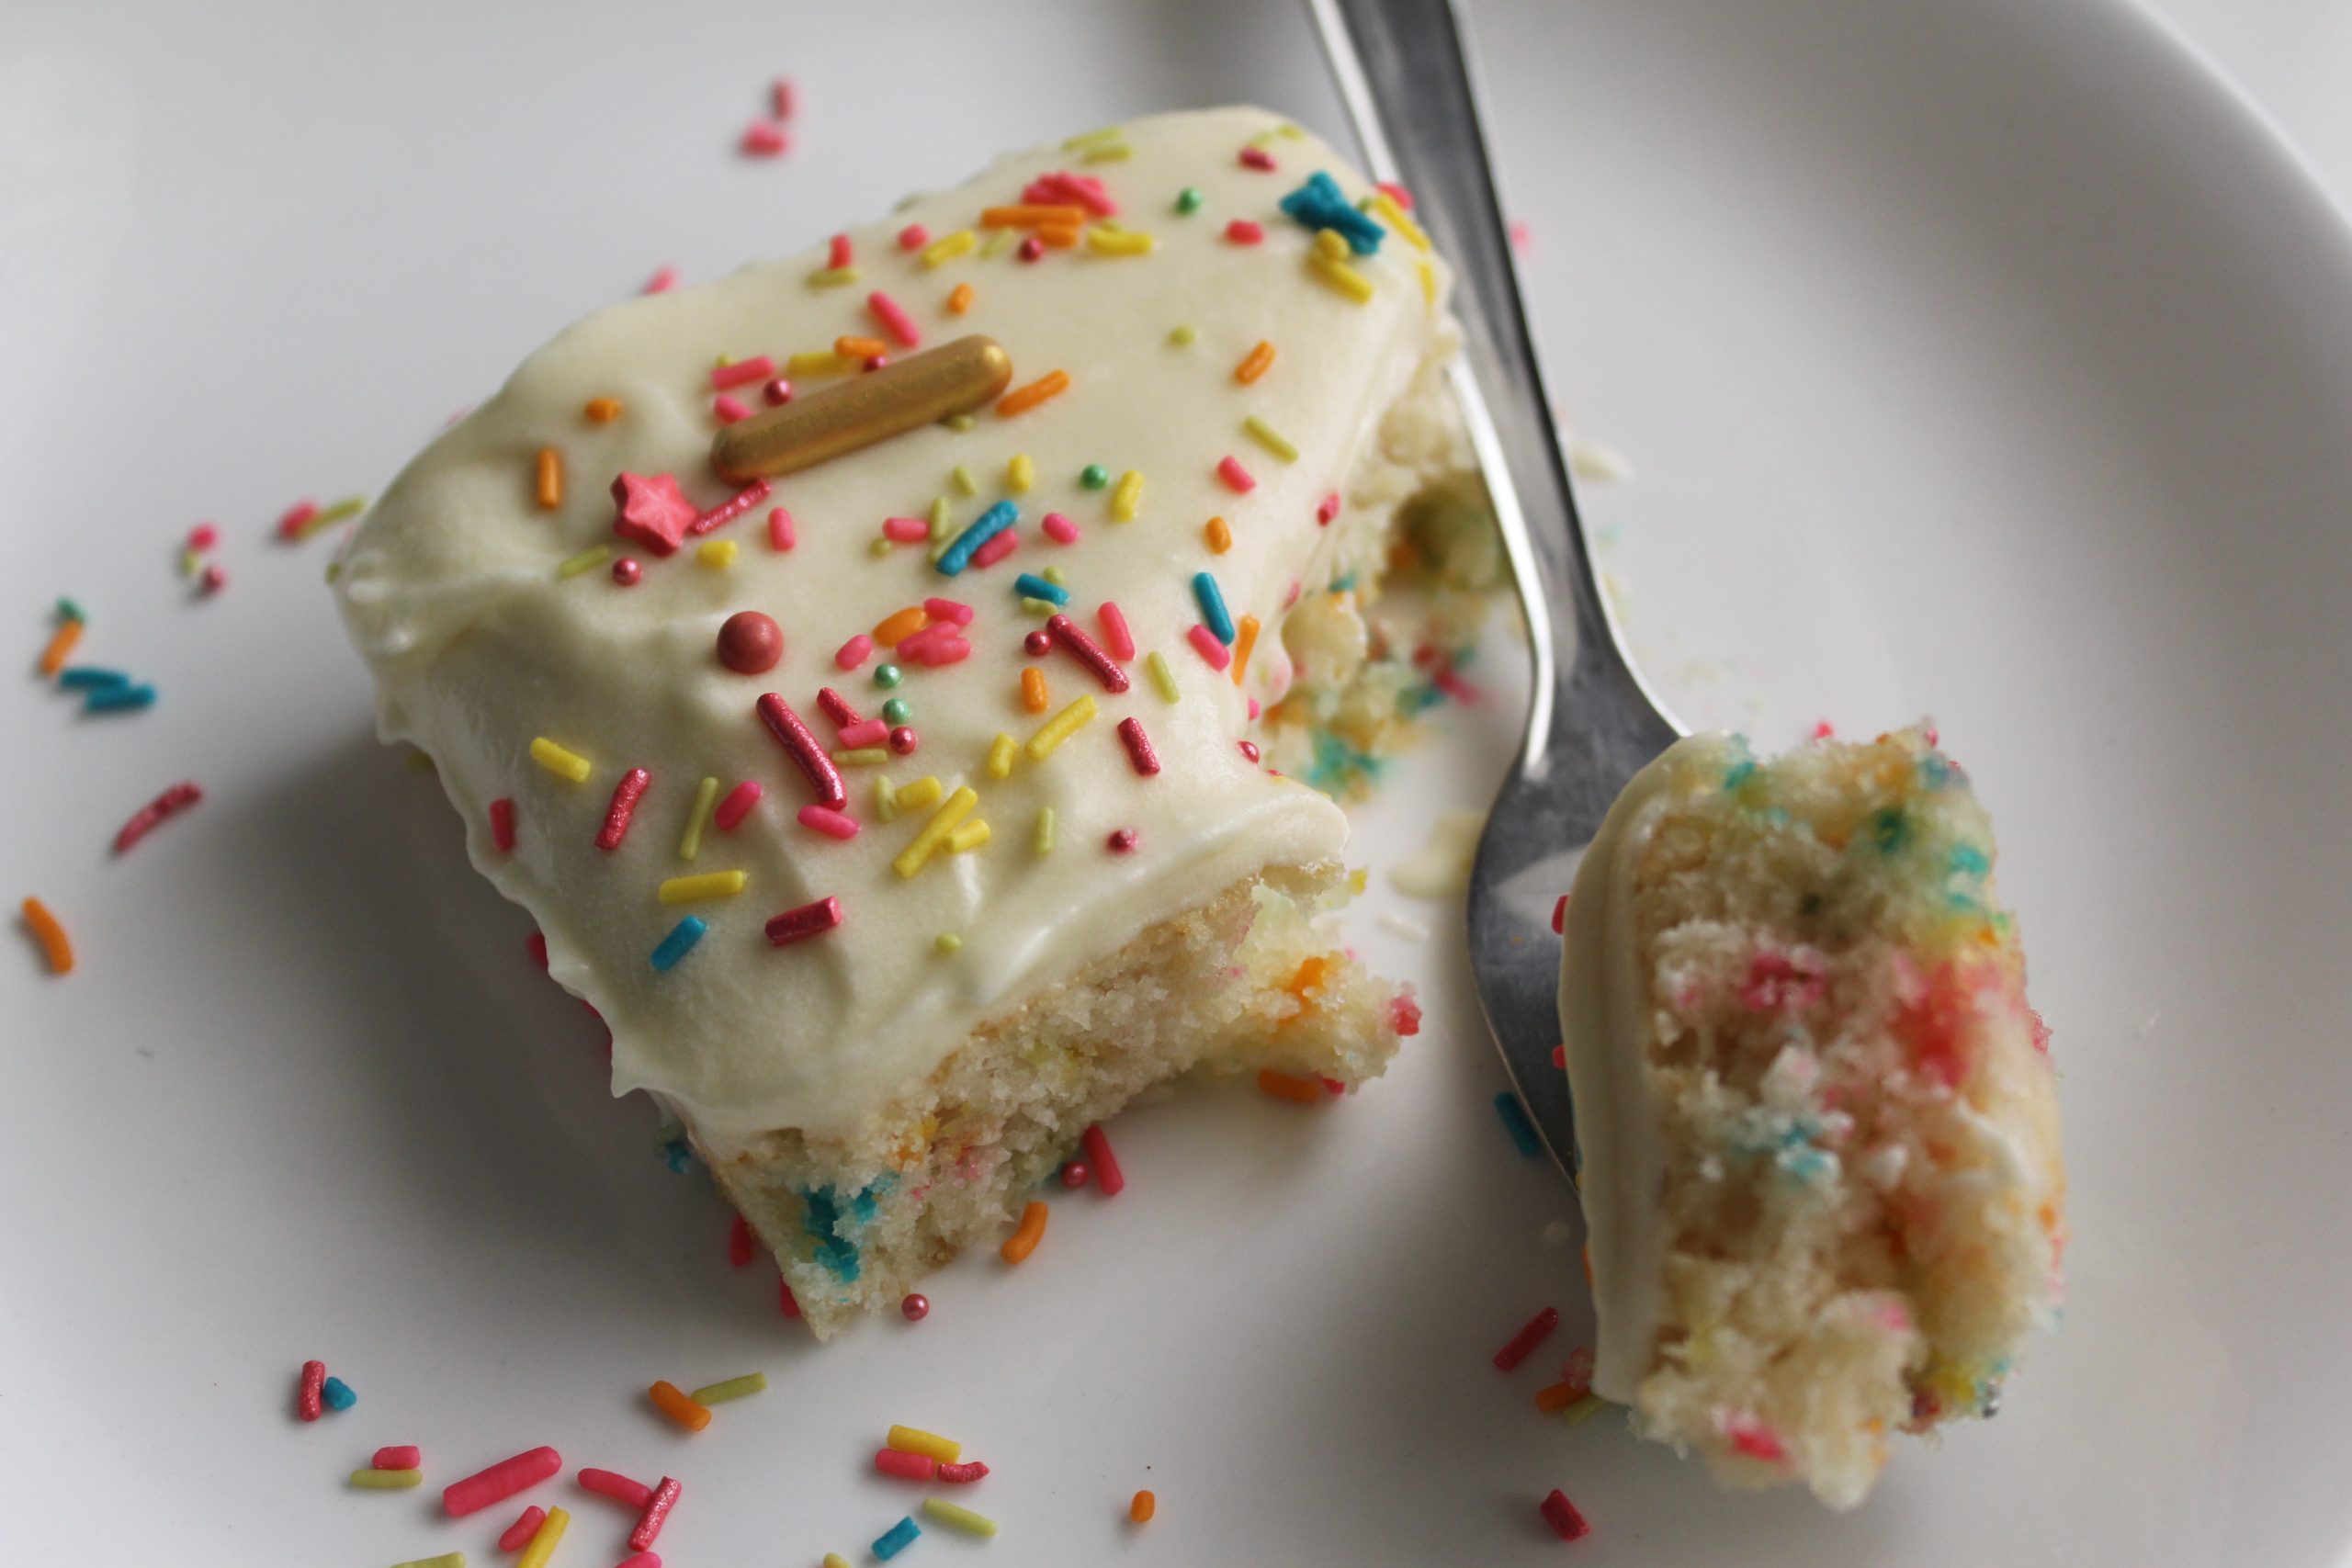 Vanilla Sheet Cake Recipe - Shugary Sweets